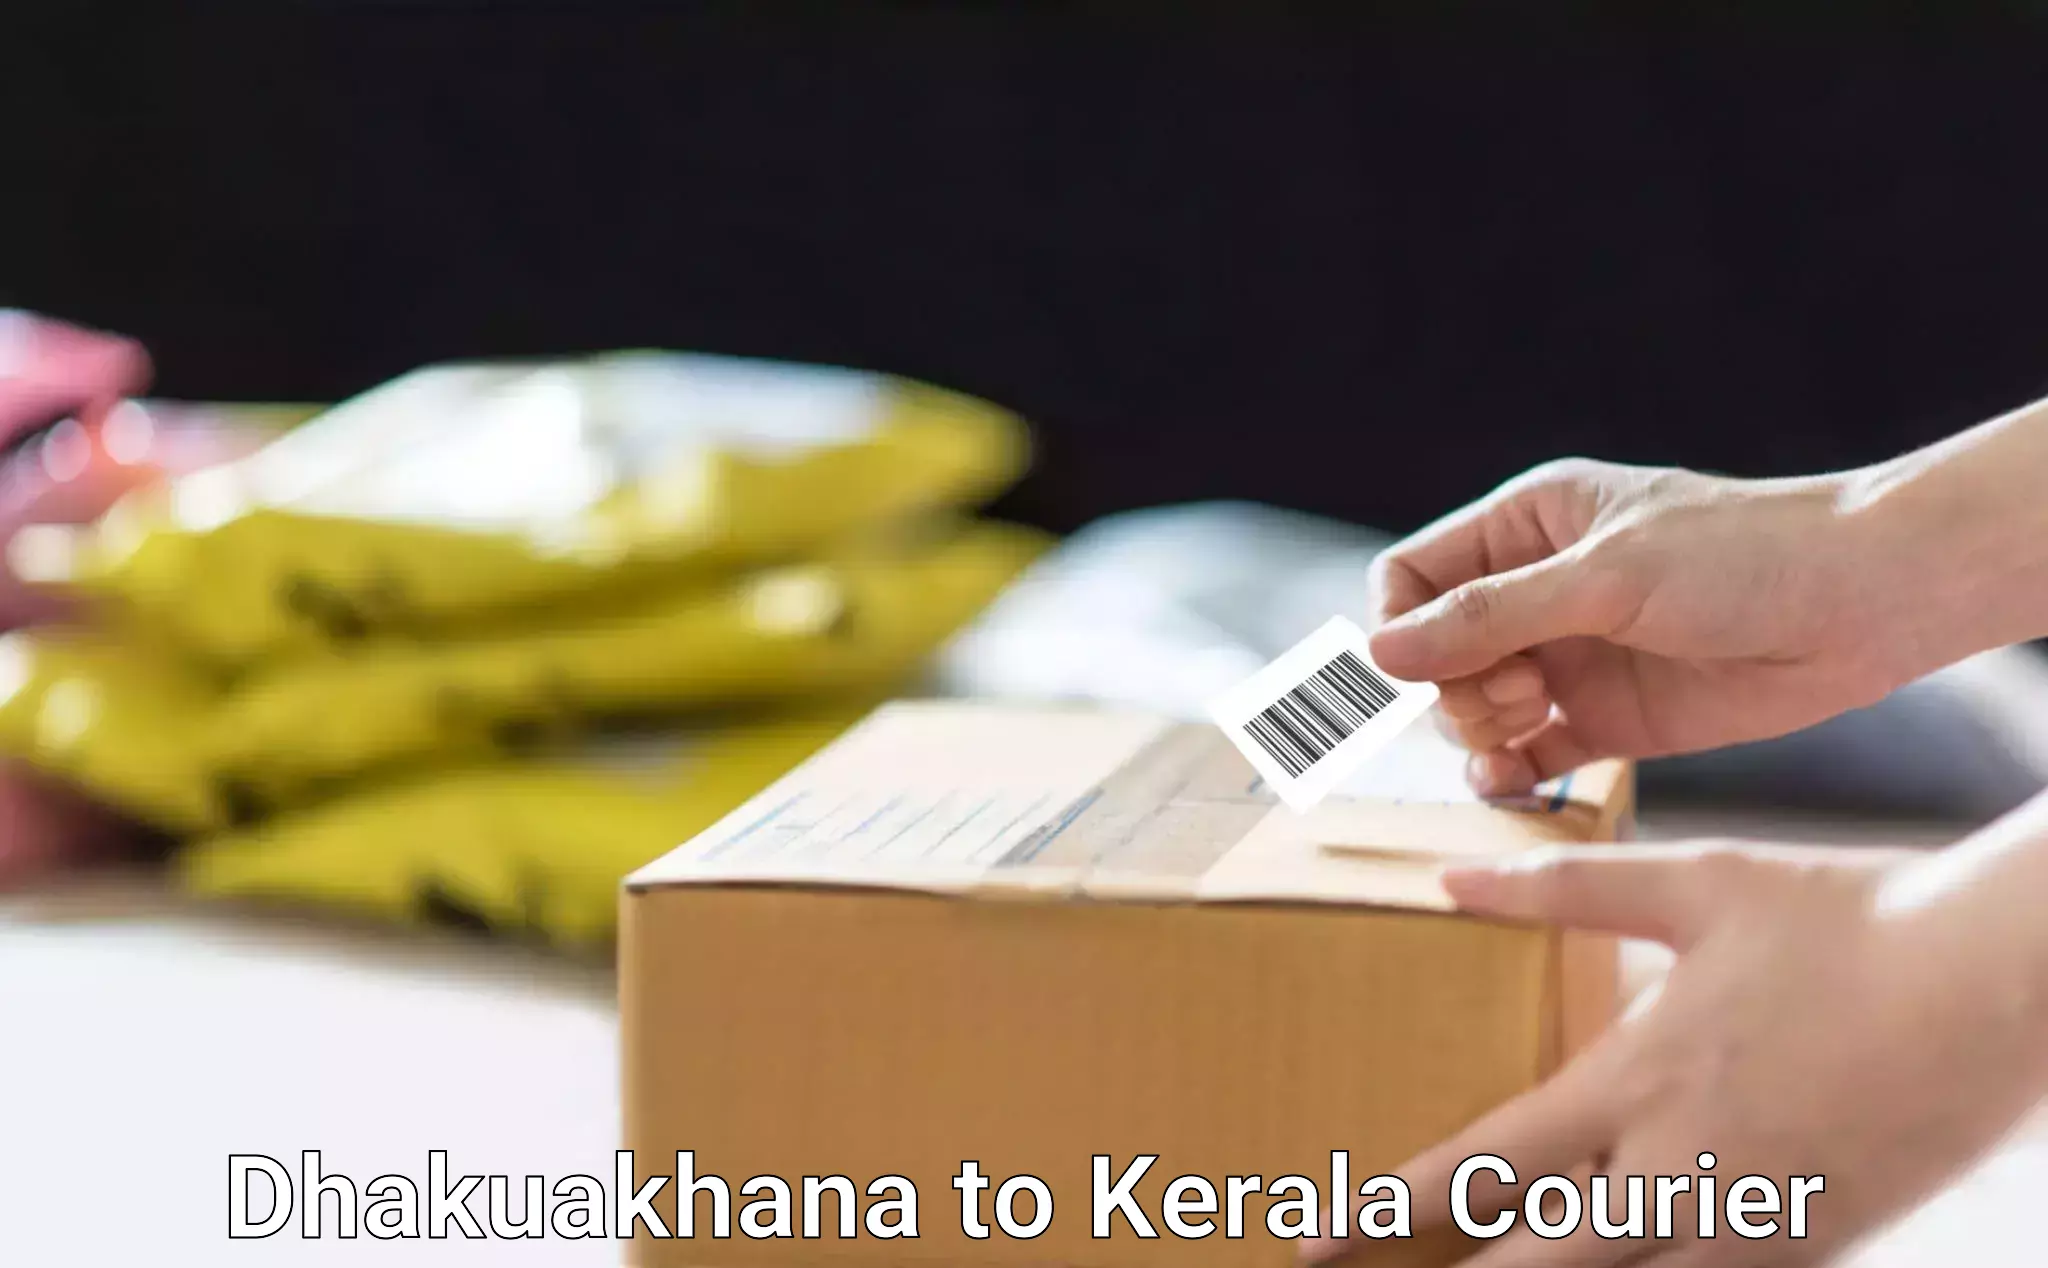 Quick booking process Dhakuakhana to Kerala